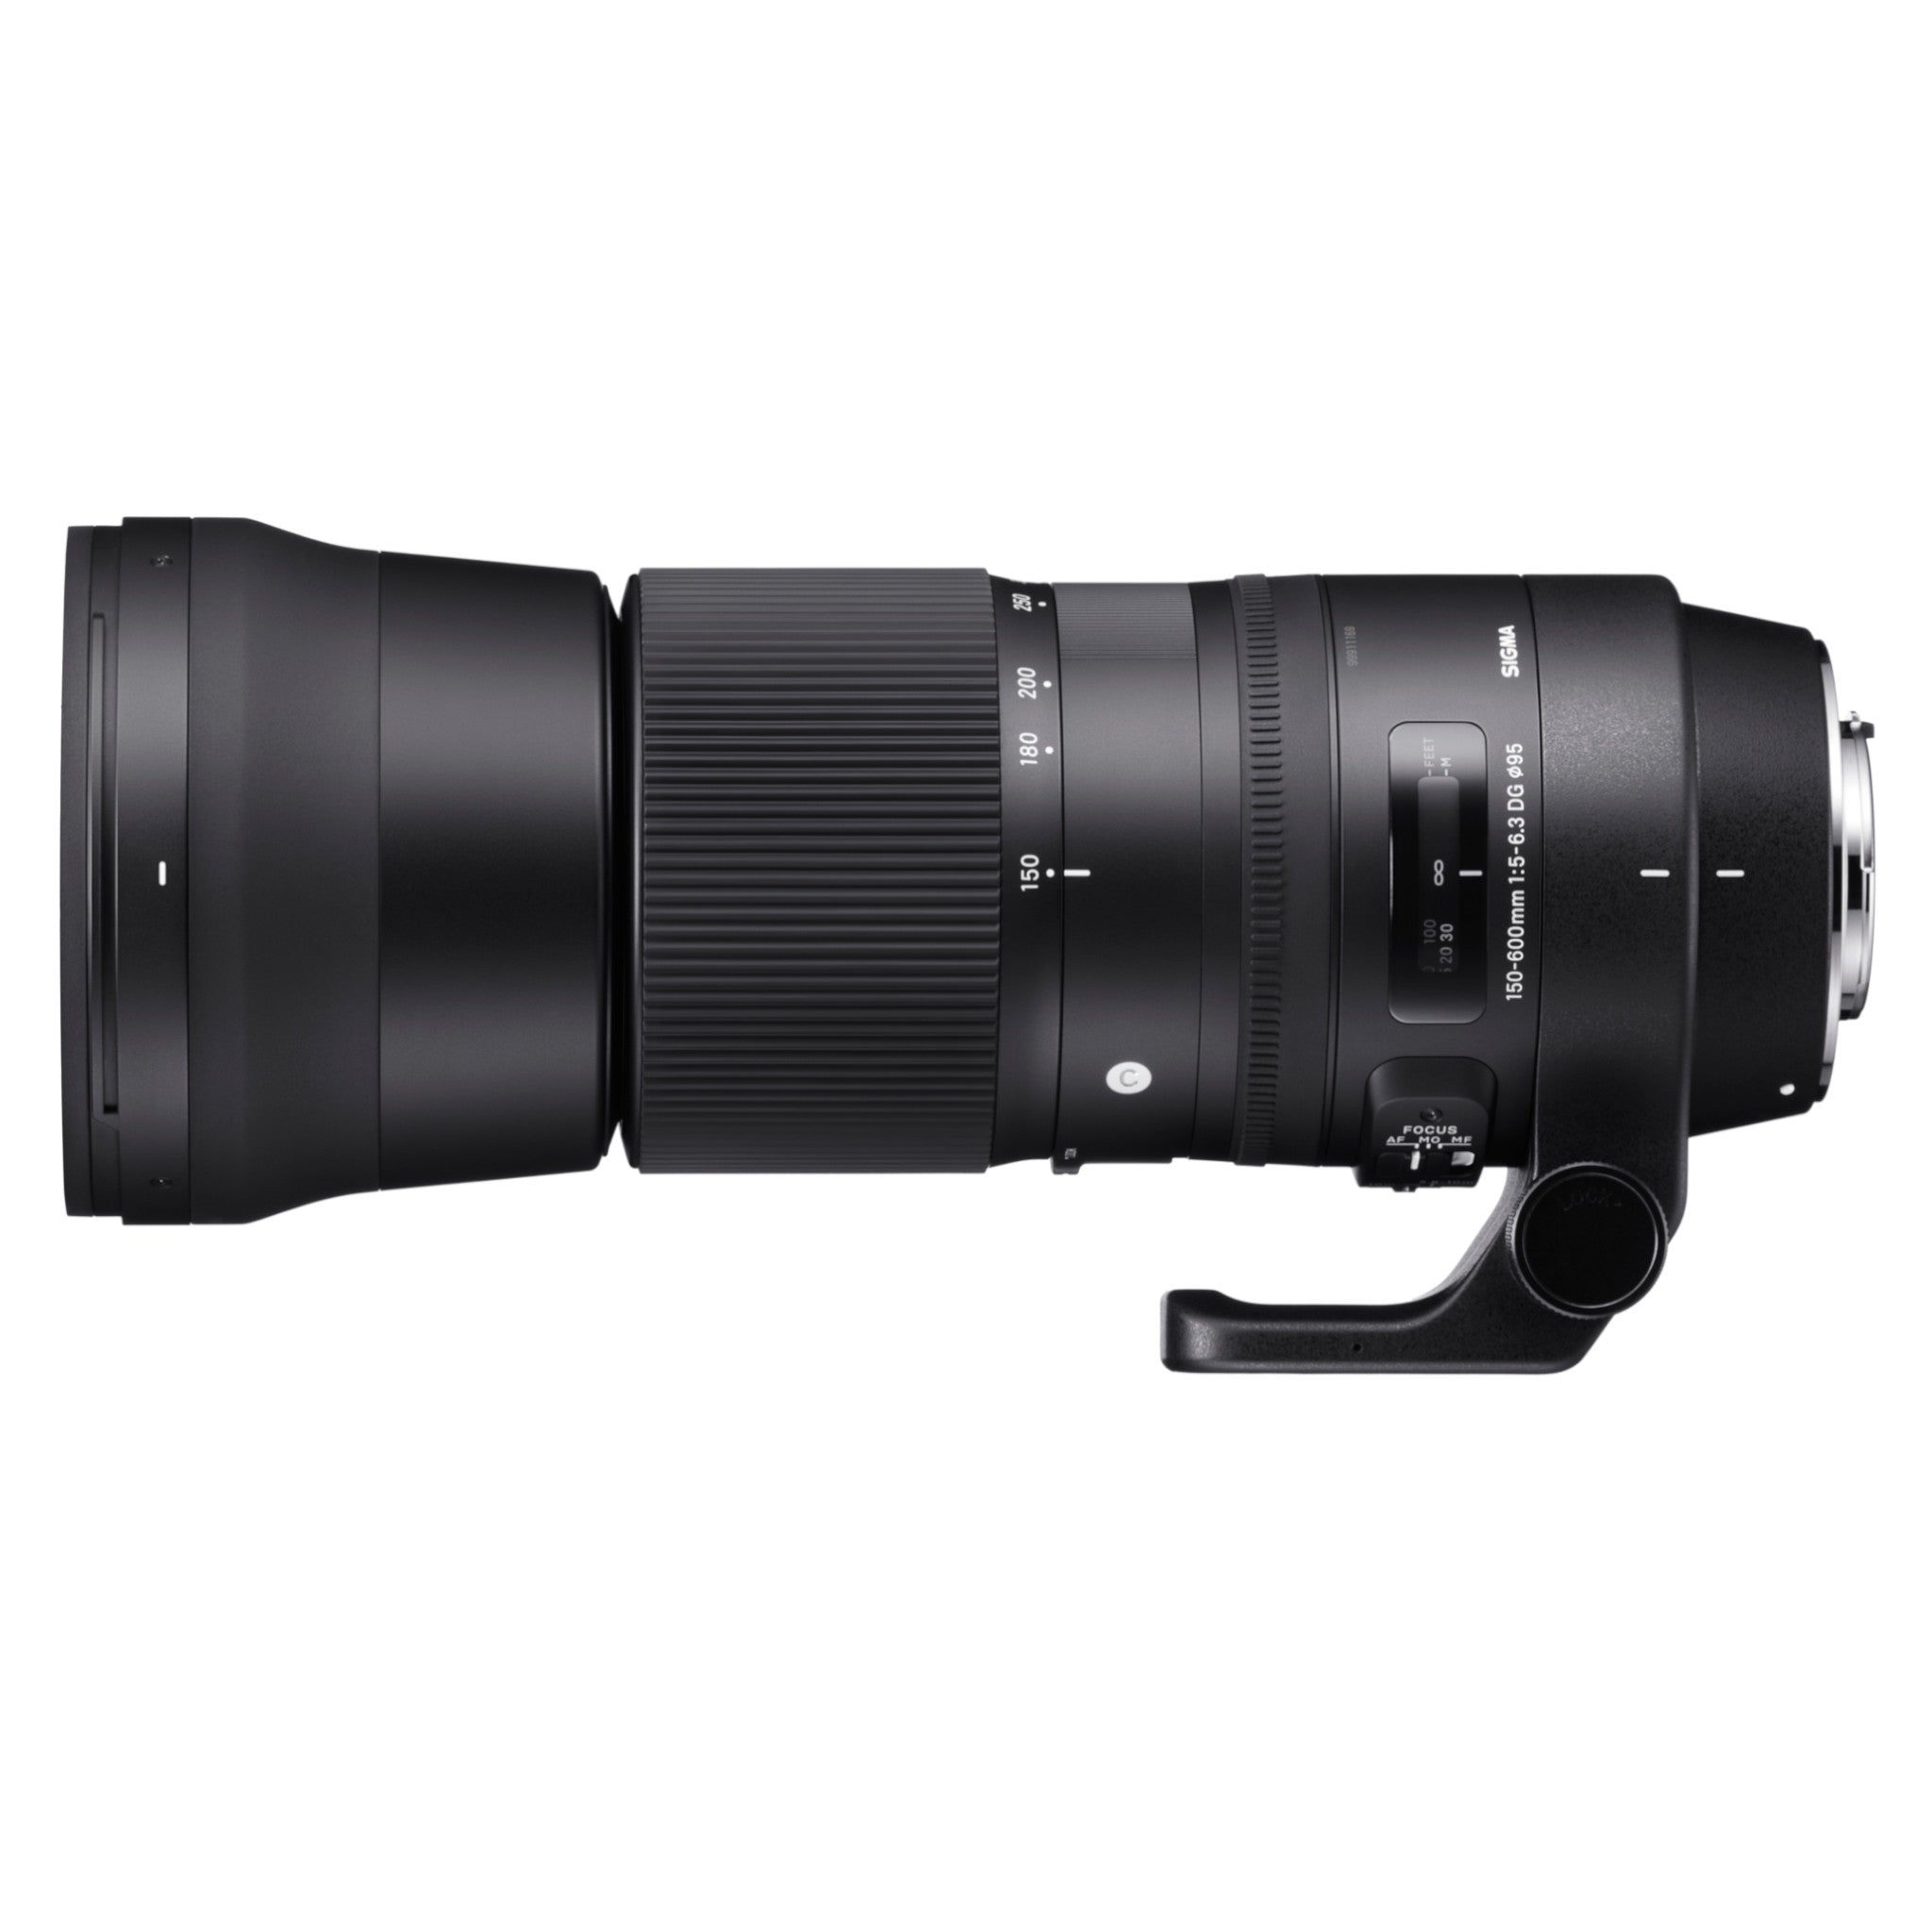 Sigma 150-600mm f5-6.3 DG OS HSM lens & 1.4 x convertor